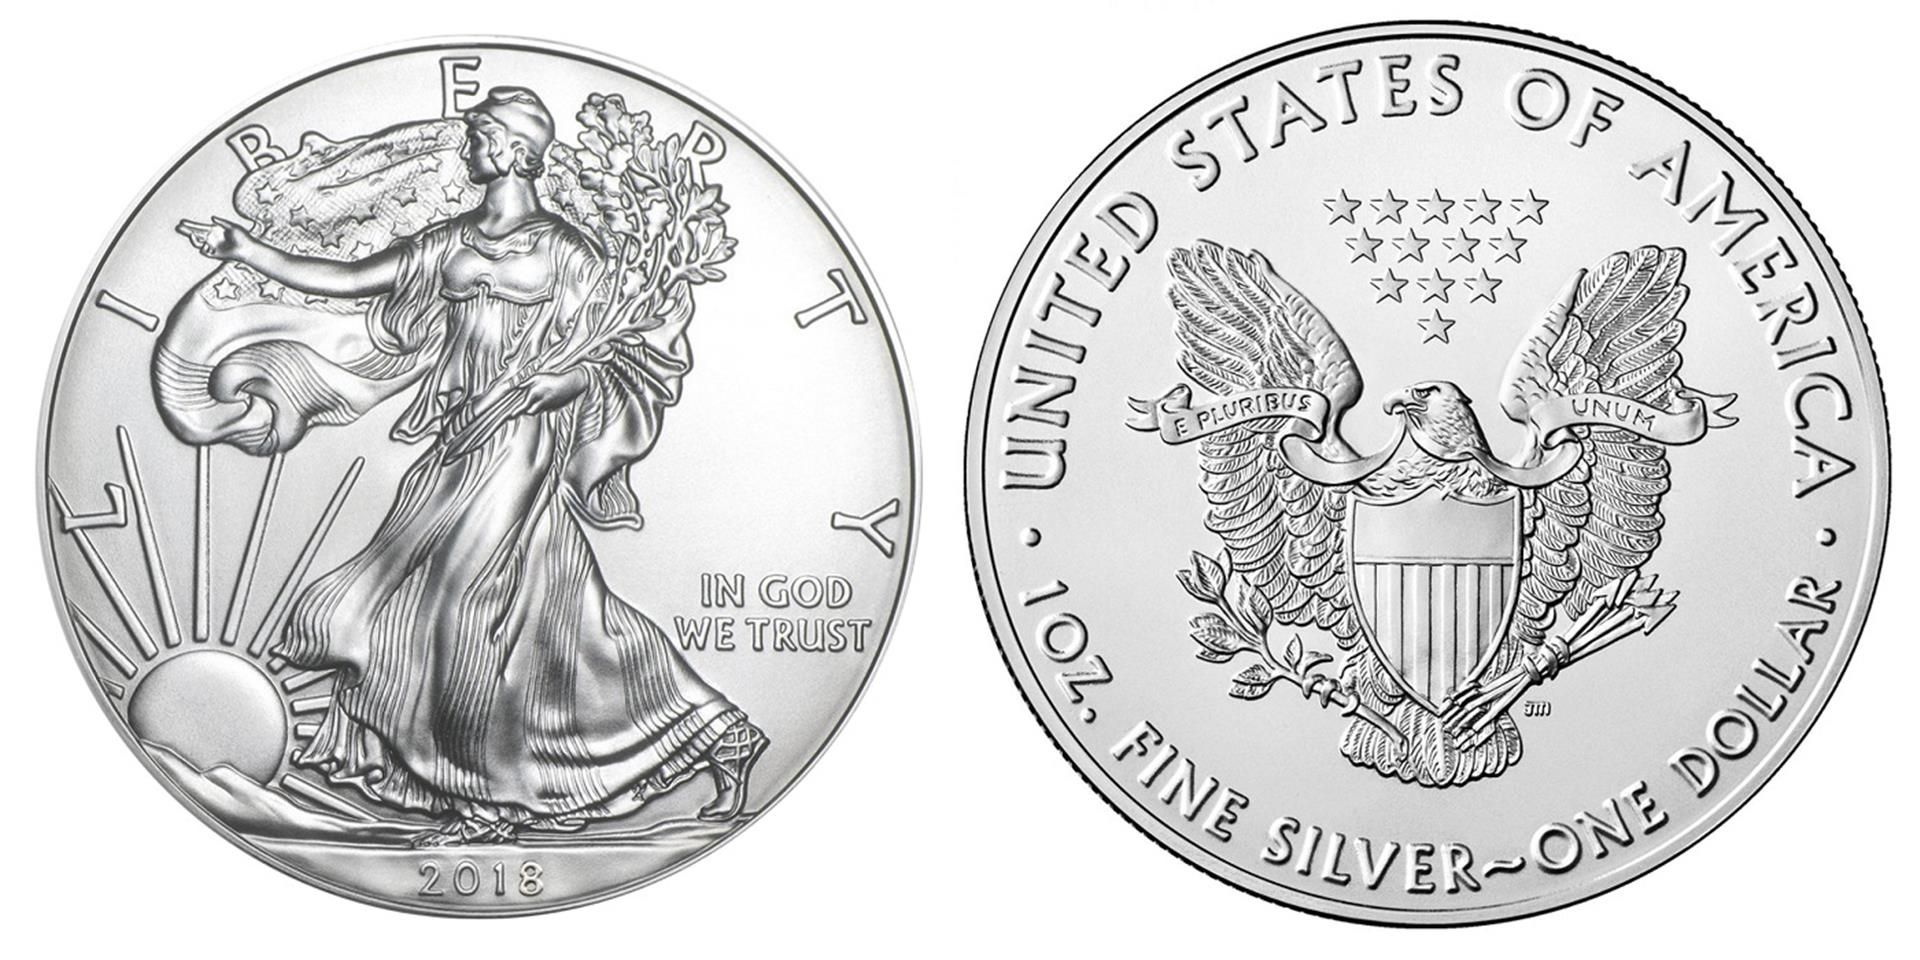 2018 American Silver Eagle .999 Fine Silver Dollar Coin - Image 2 of 2